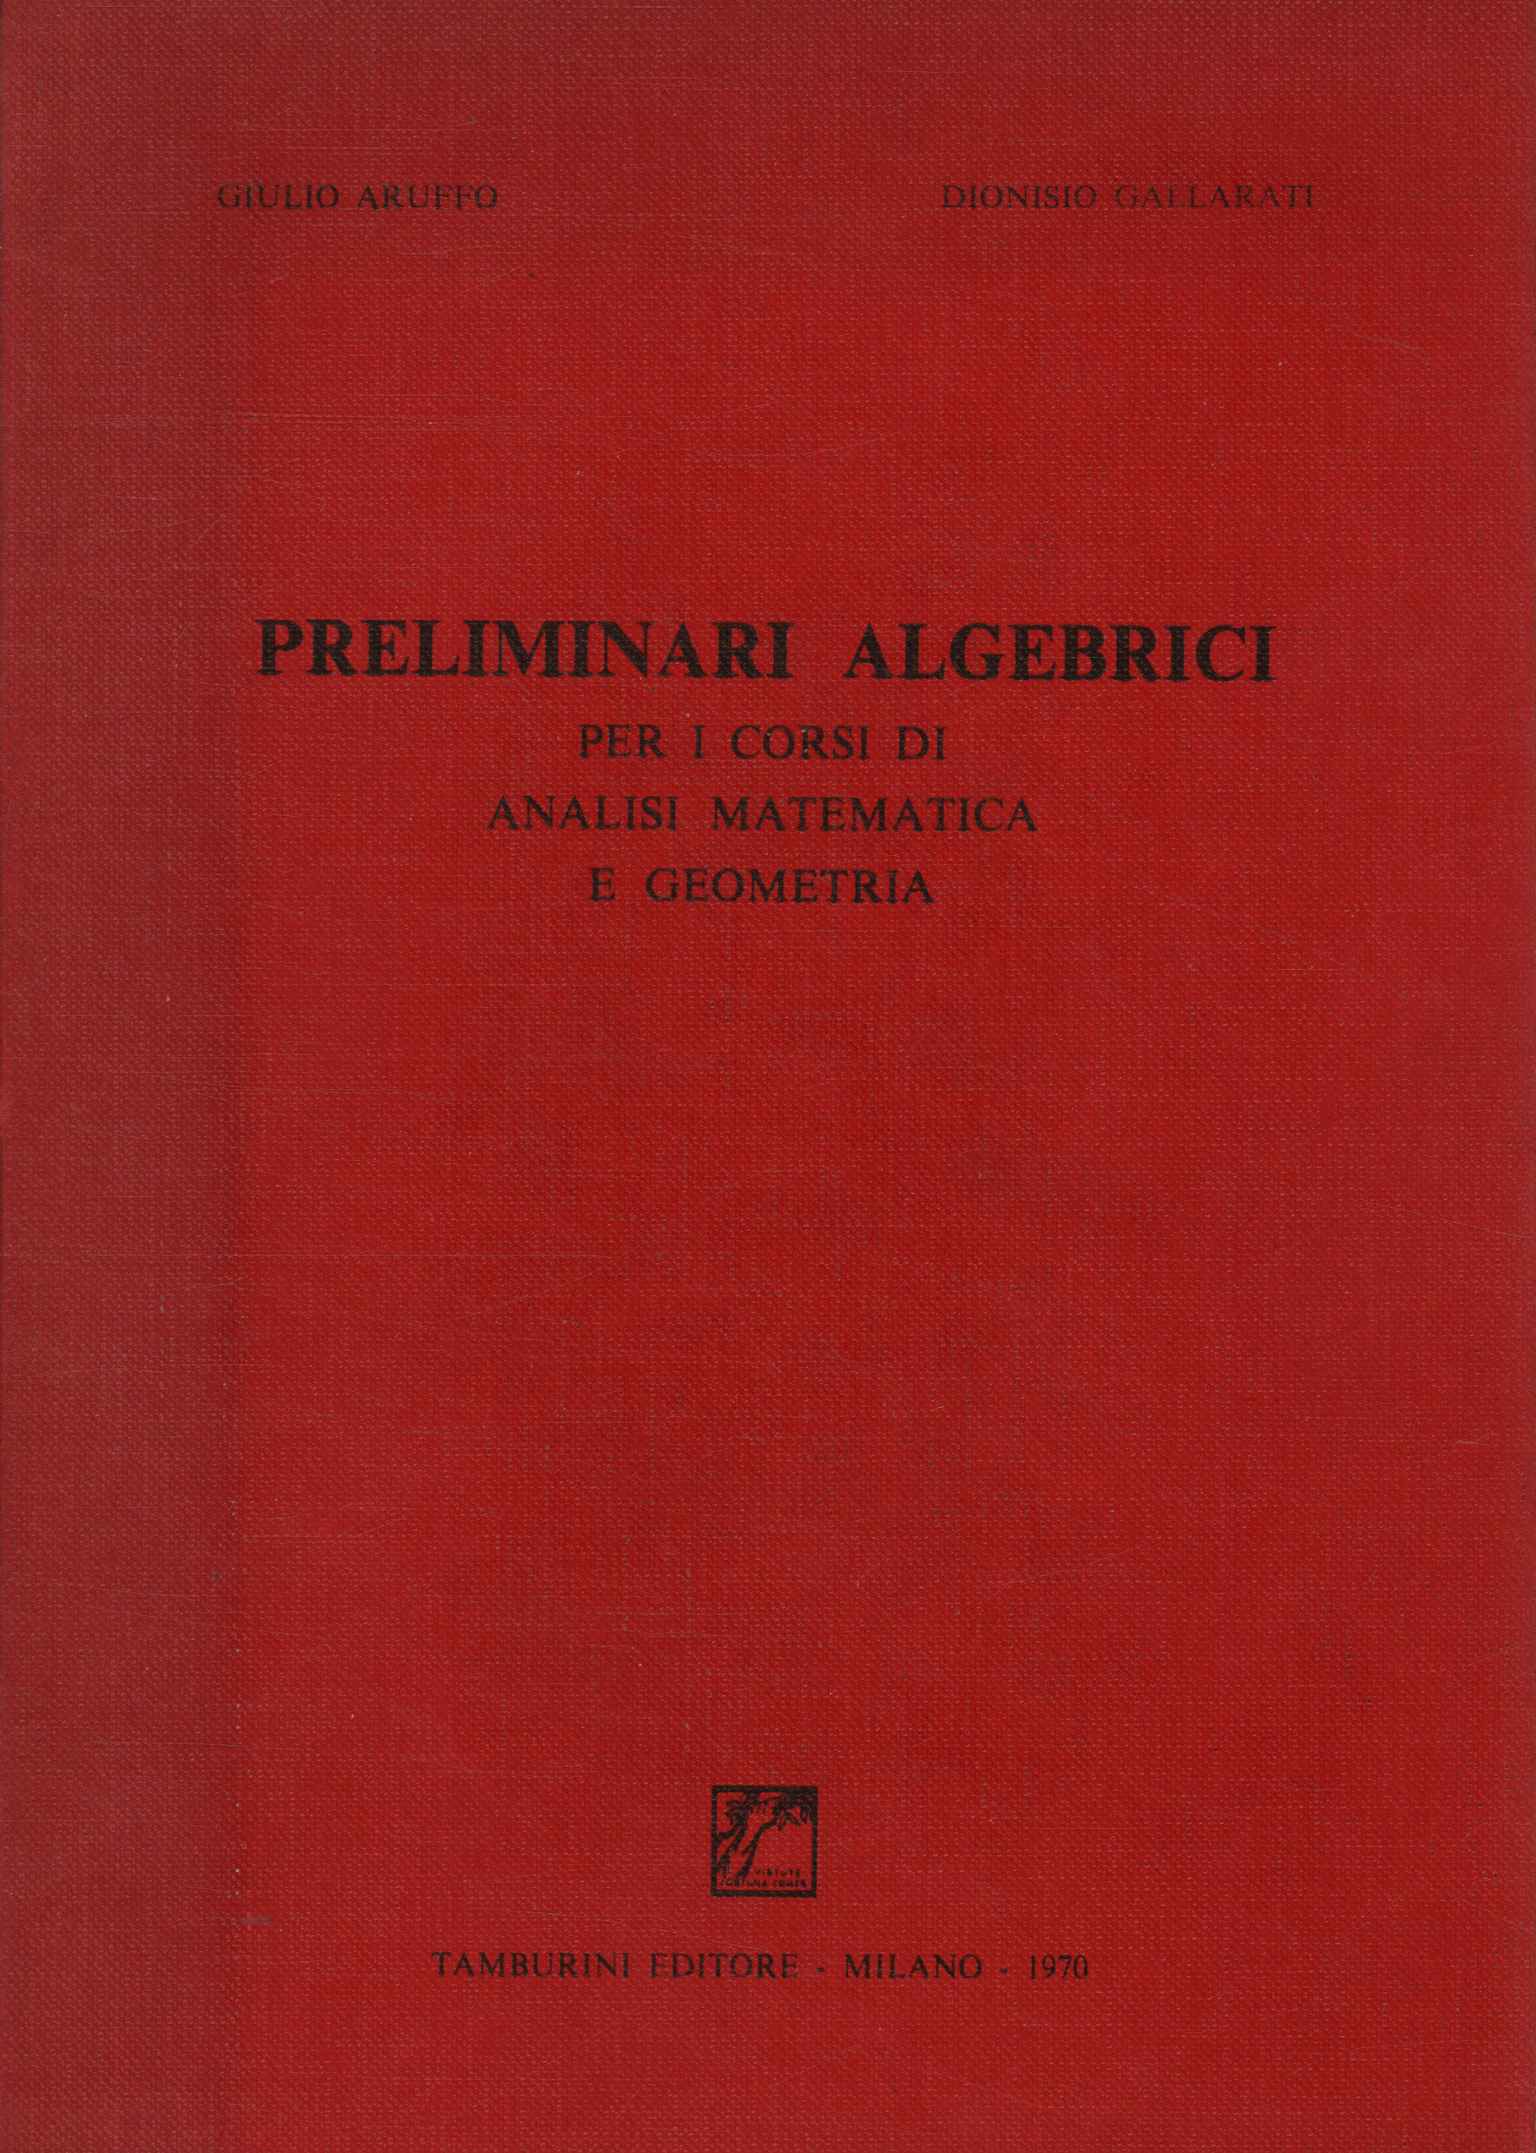 Algebraic preliminaries